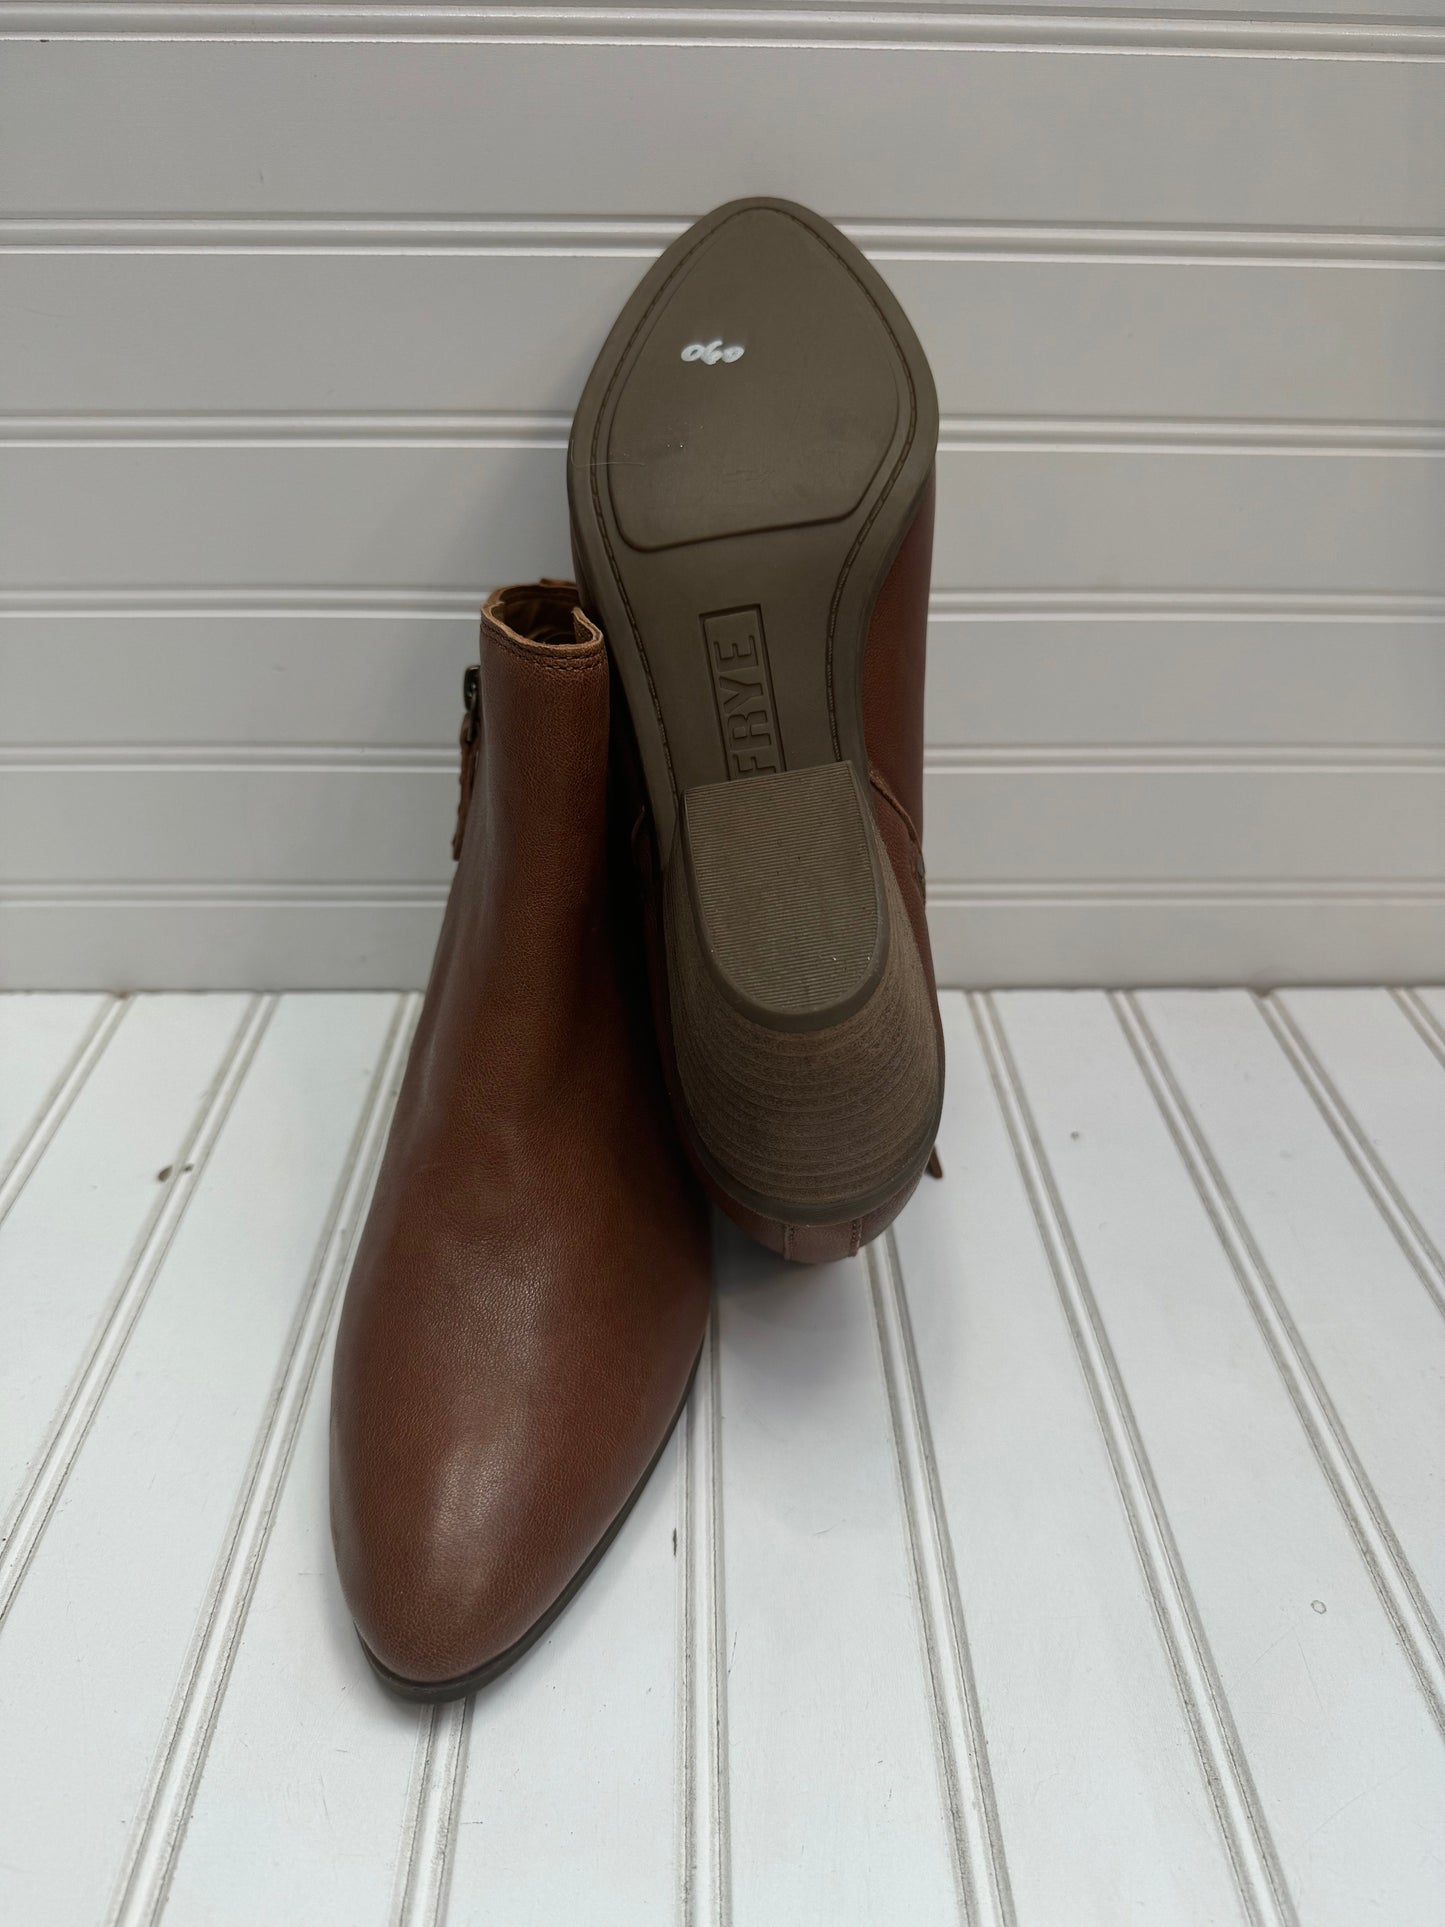 Brown Boots Designer Frye, Size 9